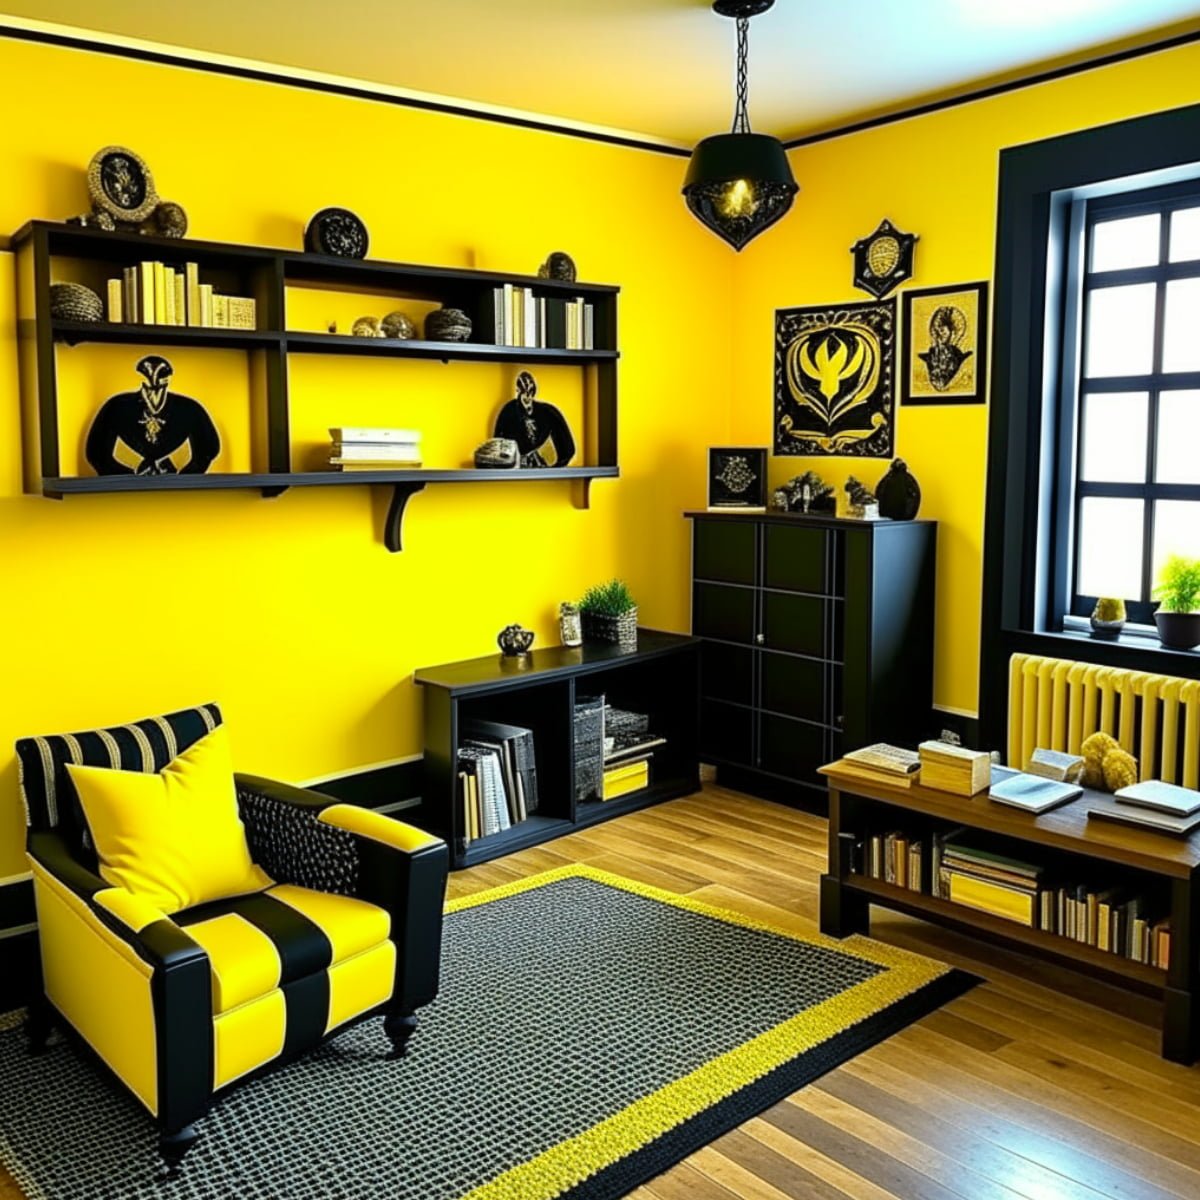 Hufflepuff Yellow and Black Harry Potter Room Decor